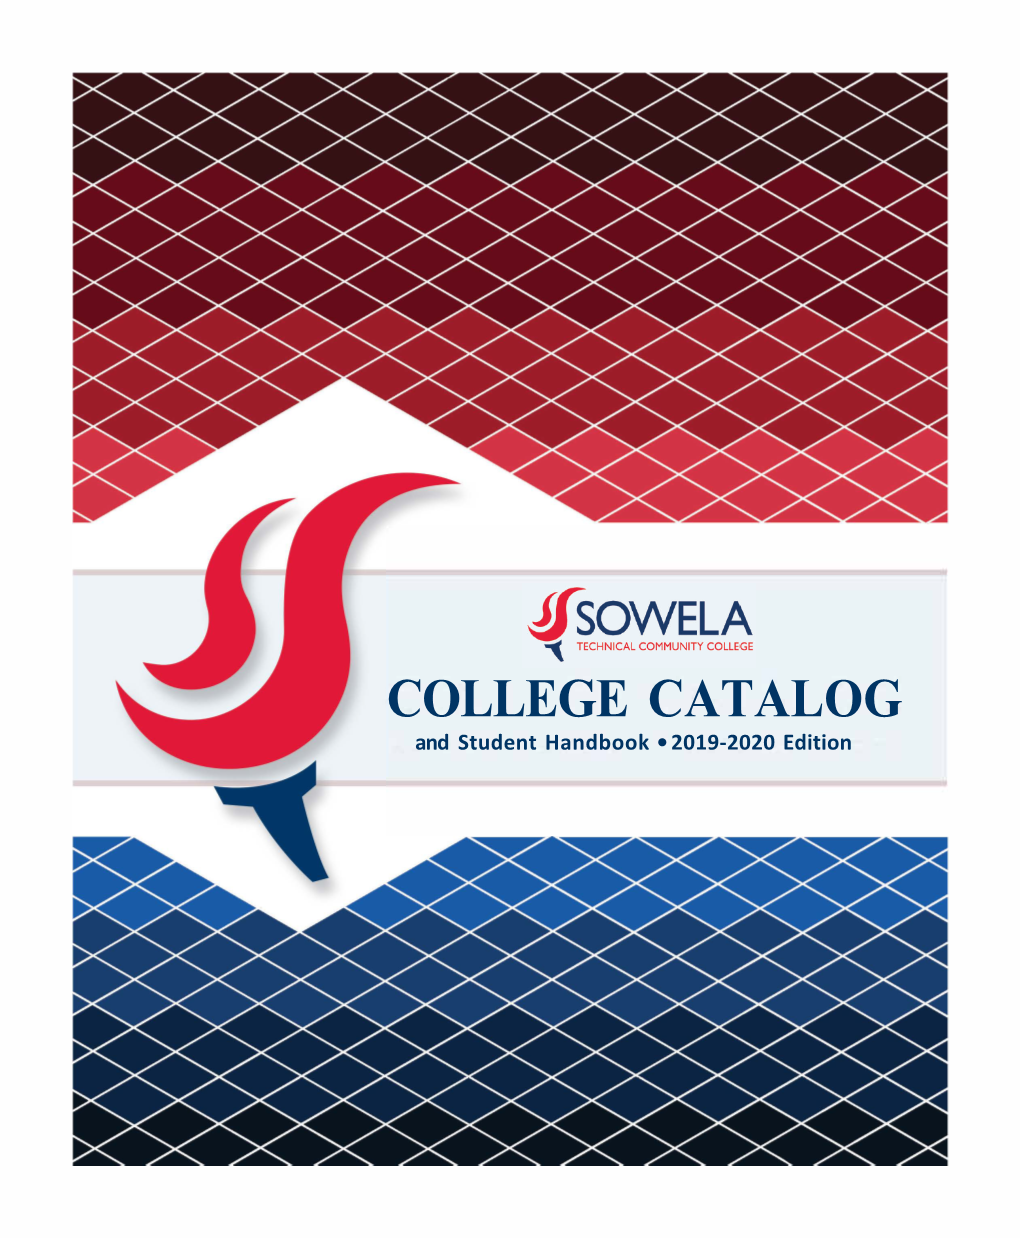 2019-2020 College Catalog and Student Handbook